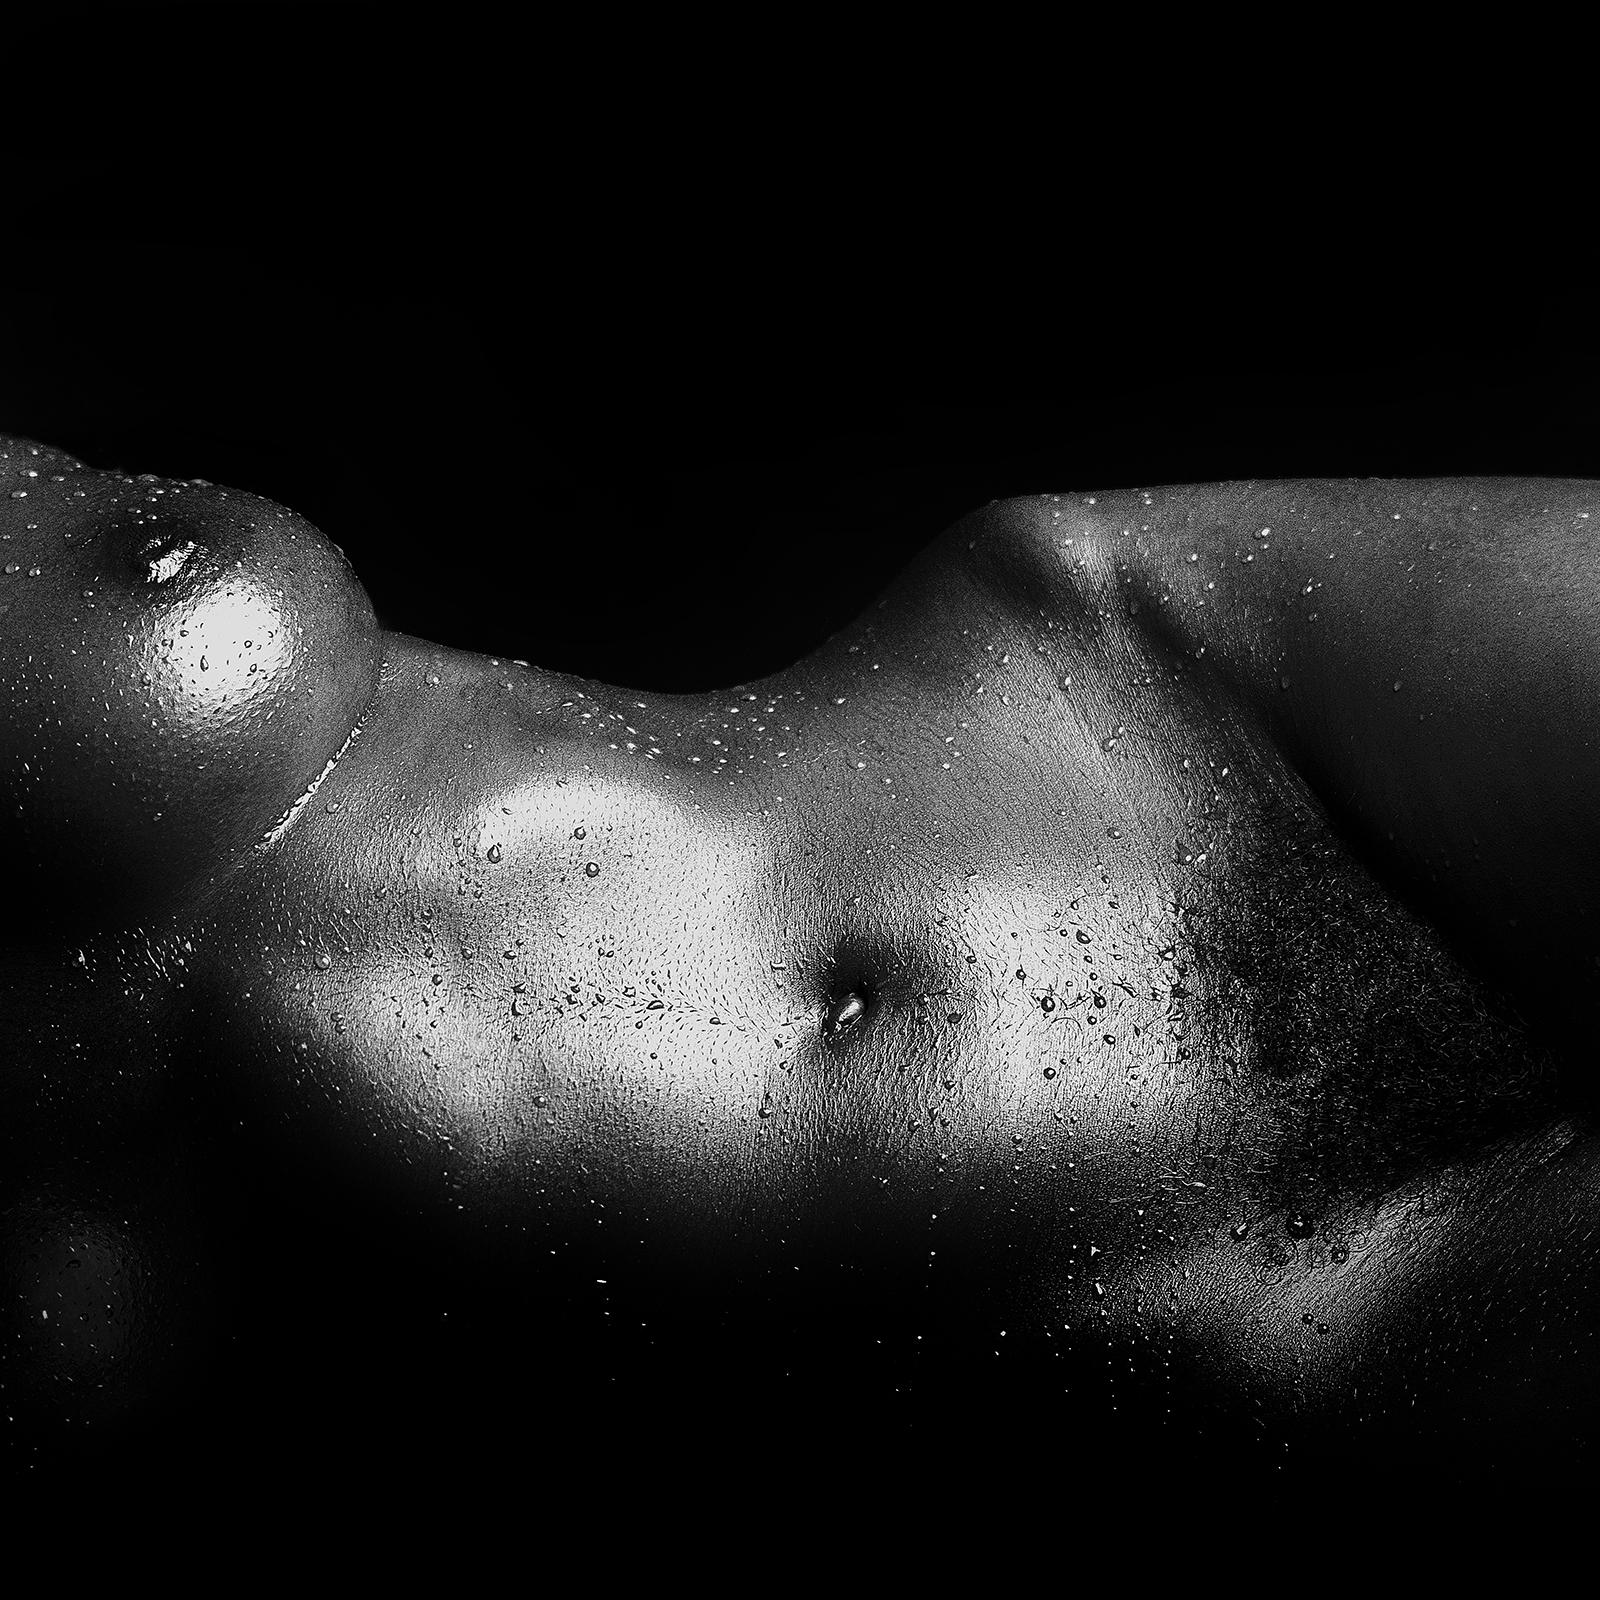 Ian Sanderson Nude Photograph – Jo-Signierter Kunstdruck in limitierter Auflage, Schwarz-Weiß-Foto, Nude, Quadrat, Modell